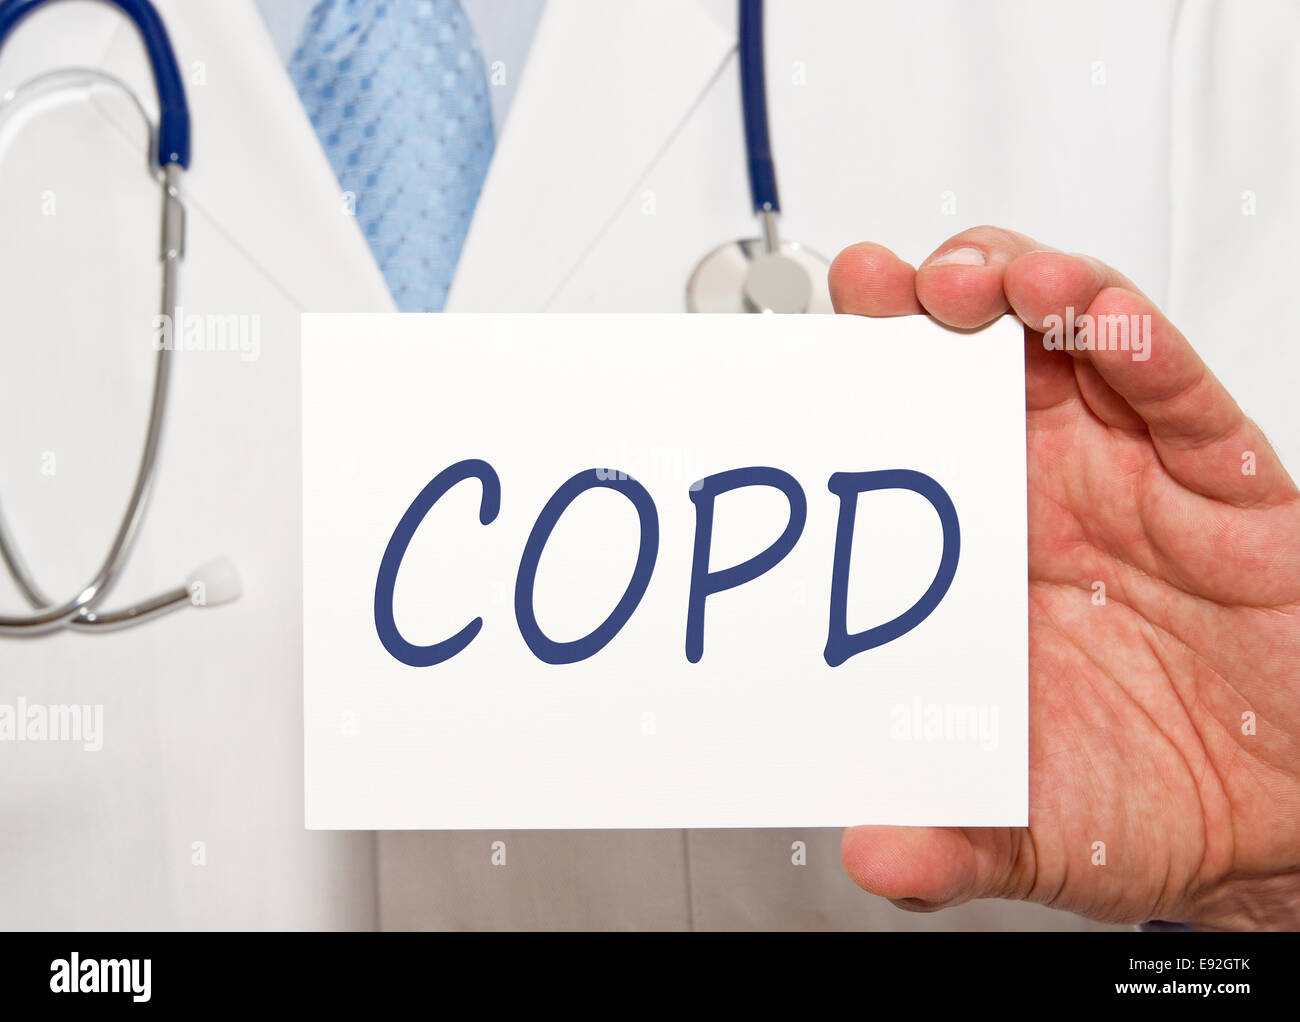 COPD Stock Photo